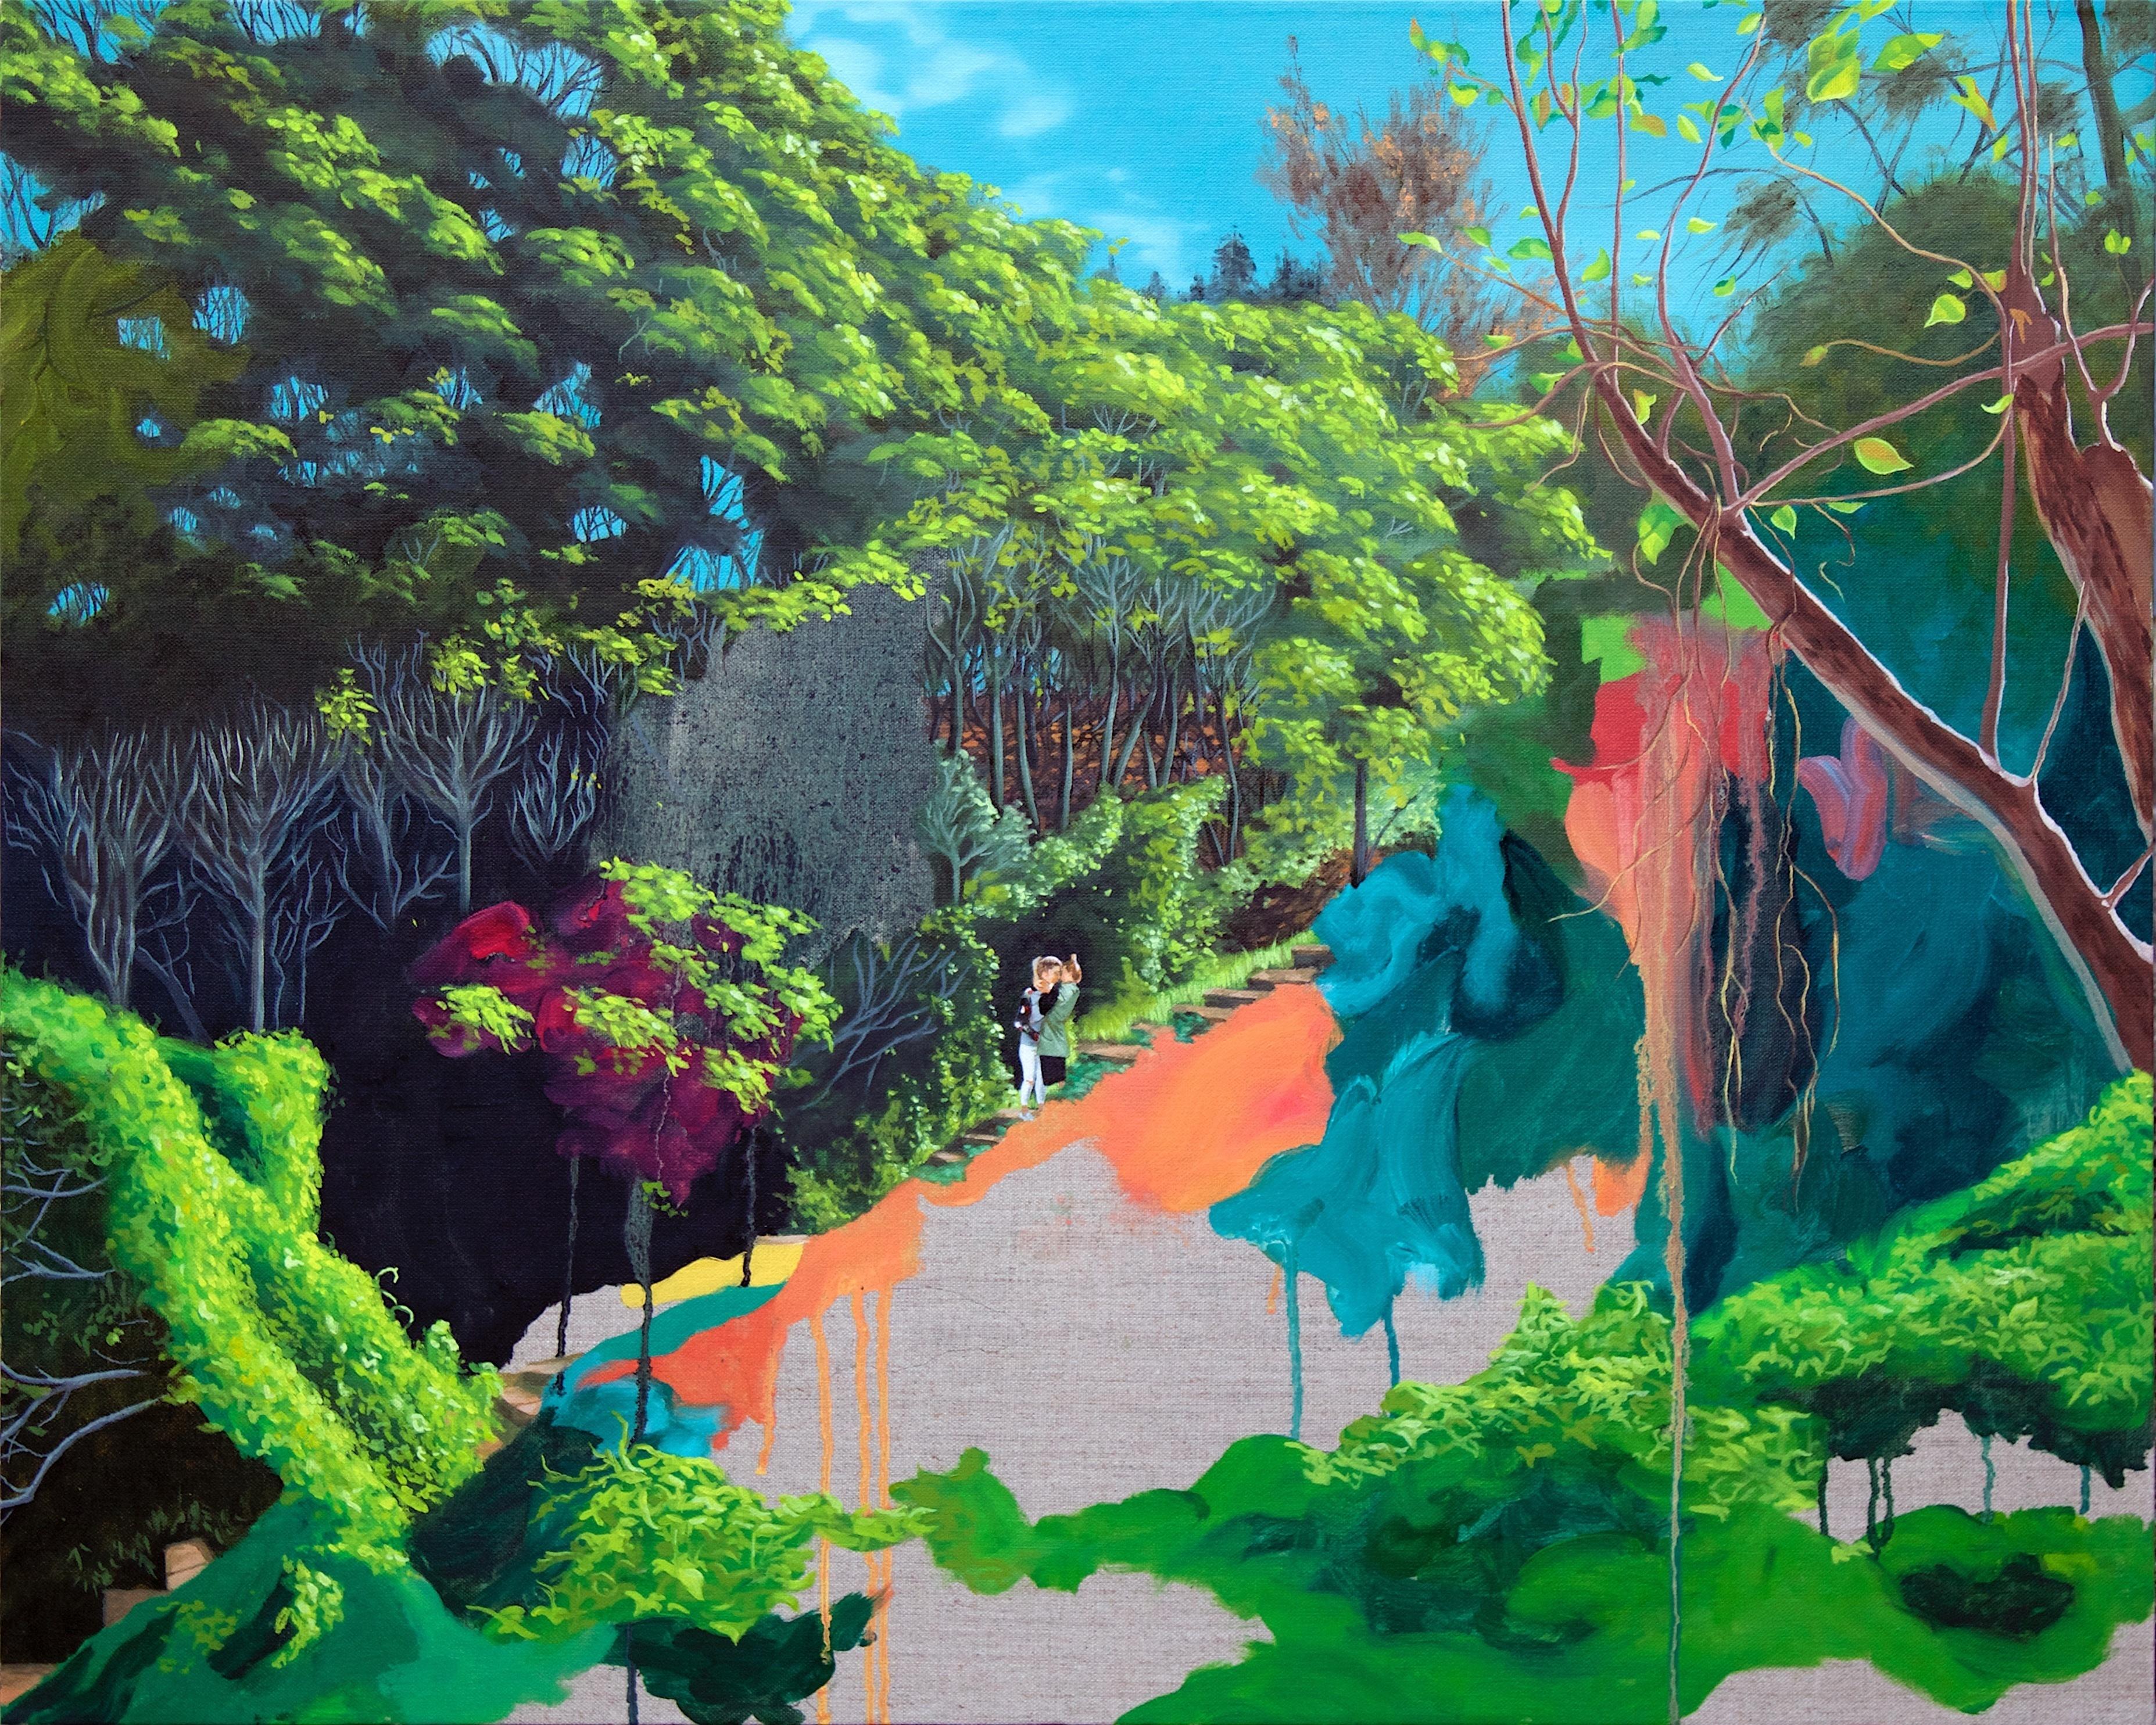 Sirius Cove Reserve, bluethumb Art Prize finalist painting by Kim Leutwyler